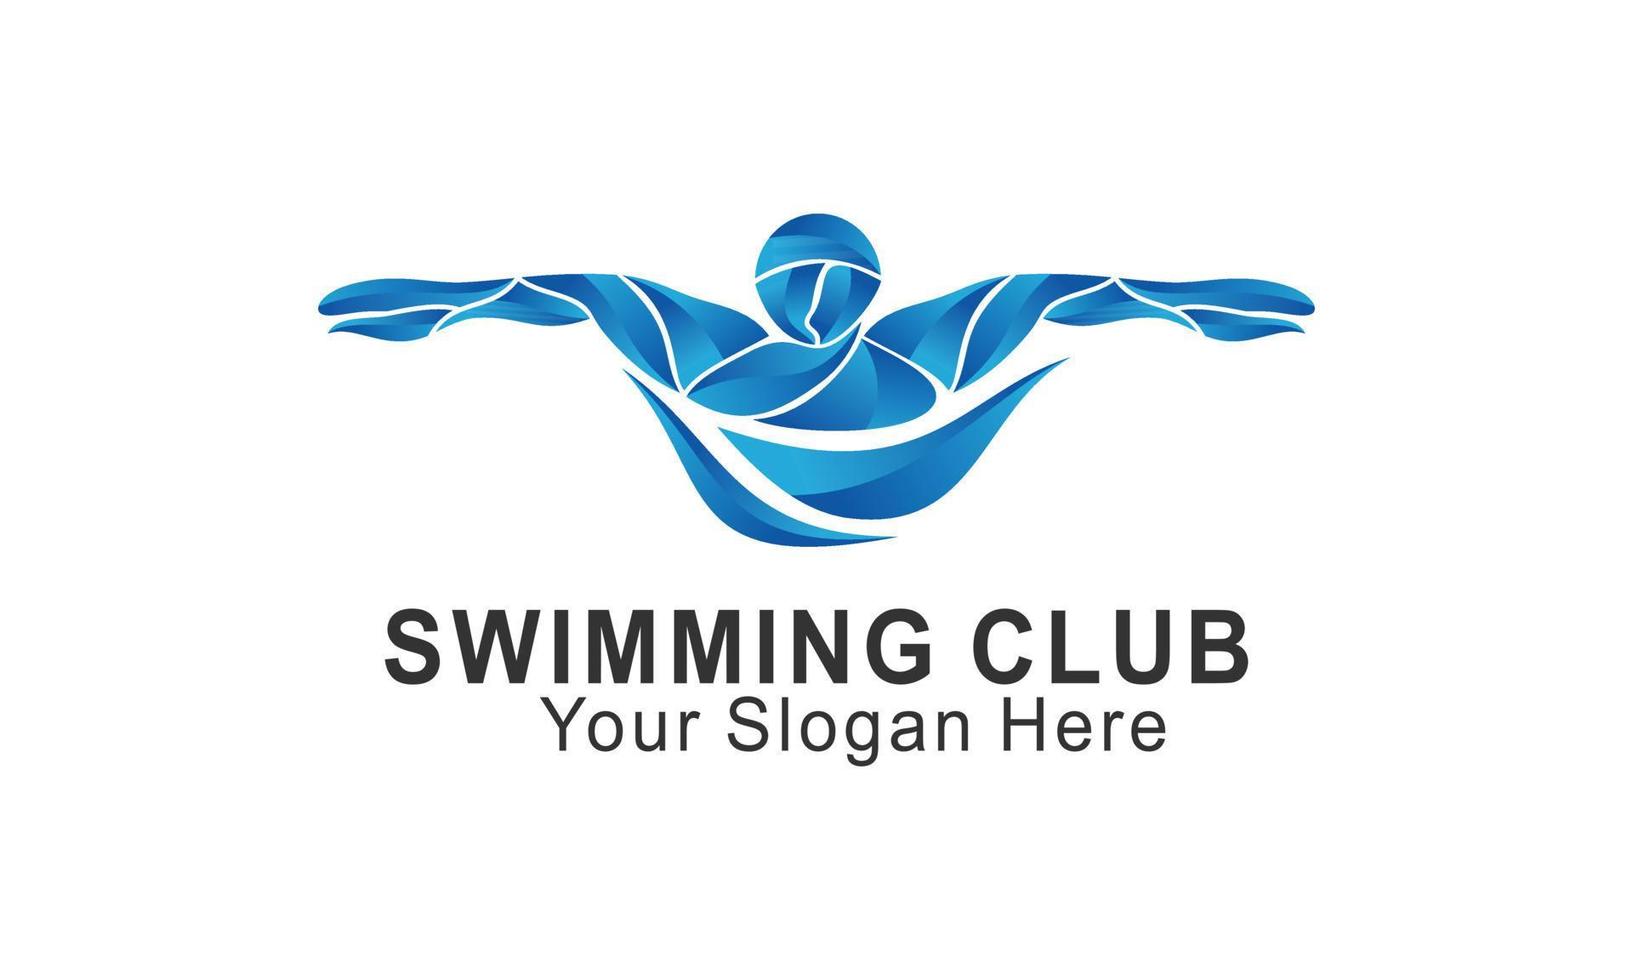 bleu natation logo silhouette mer océan eau vague logo vecteur